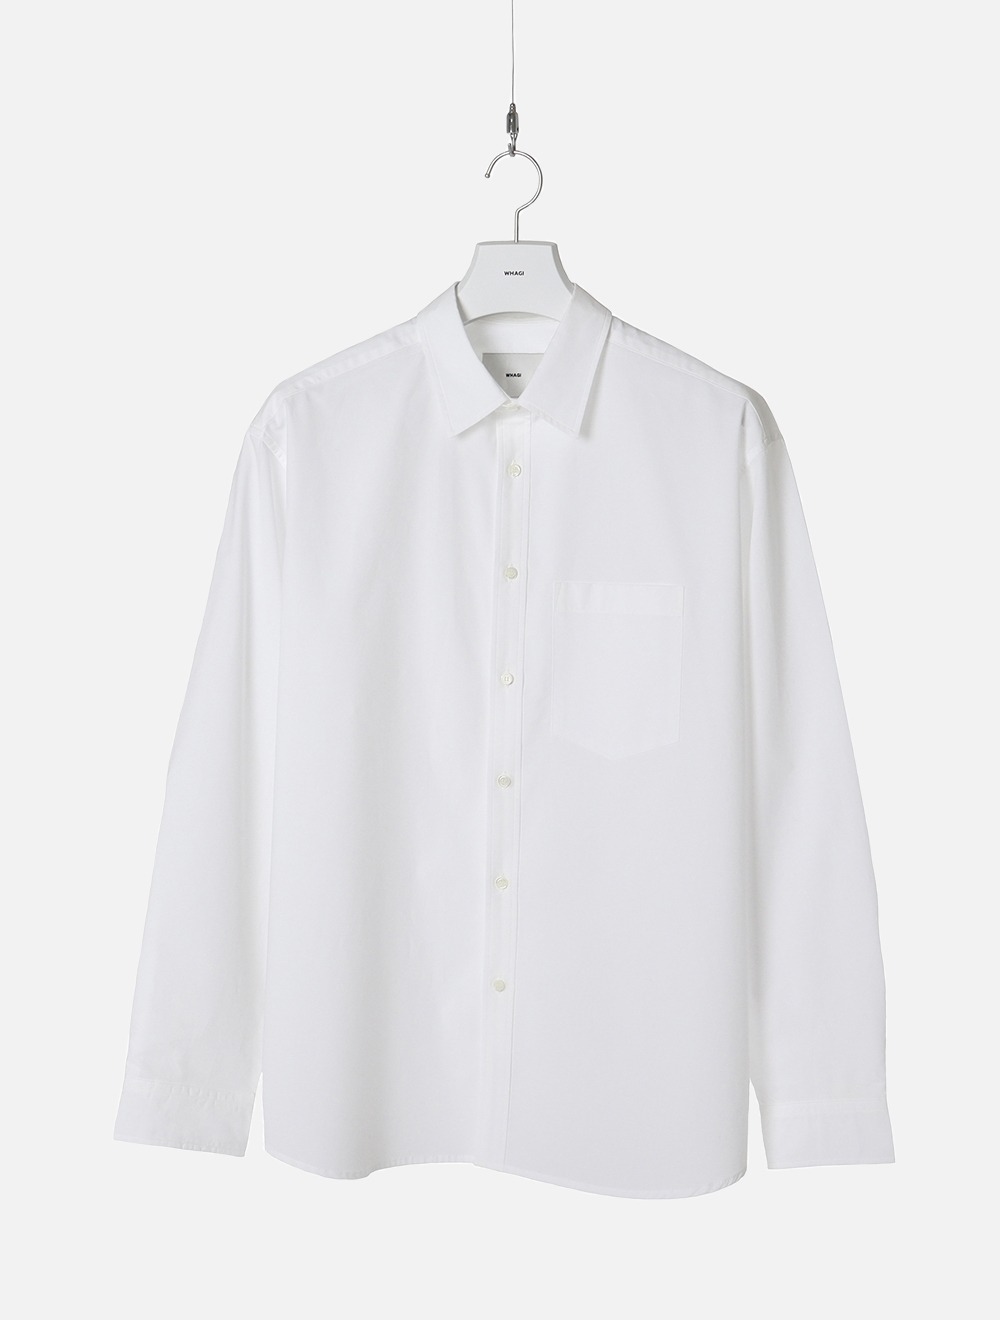 Architect Shirt (White)